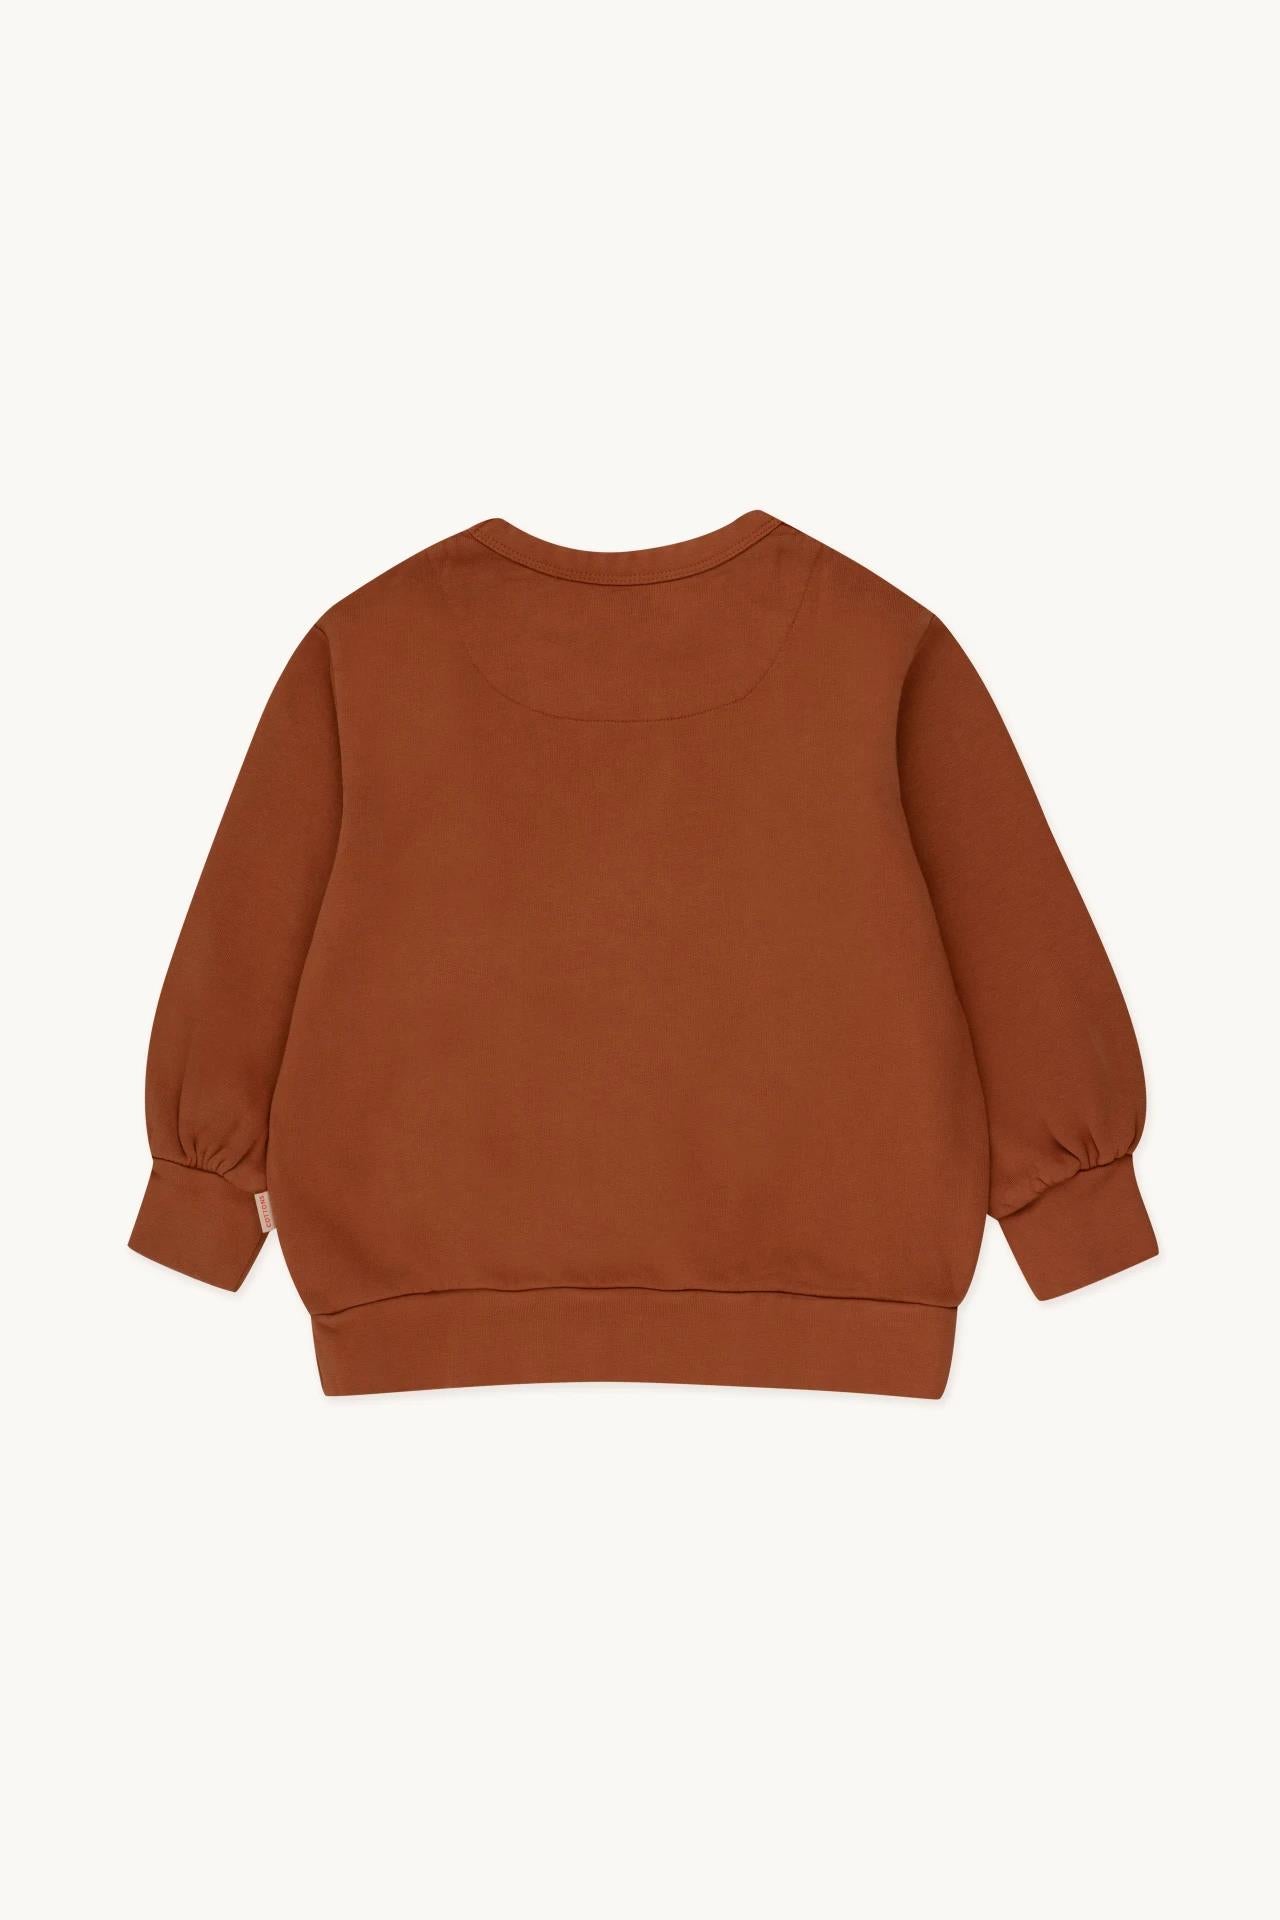 Merci  Sweatshirt ,Brown - Tiny Cottons